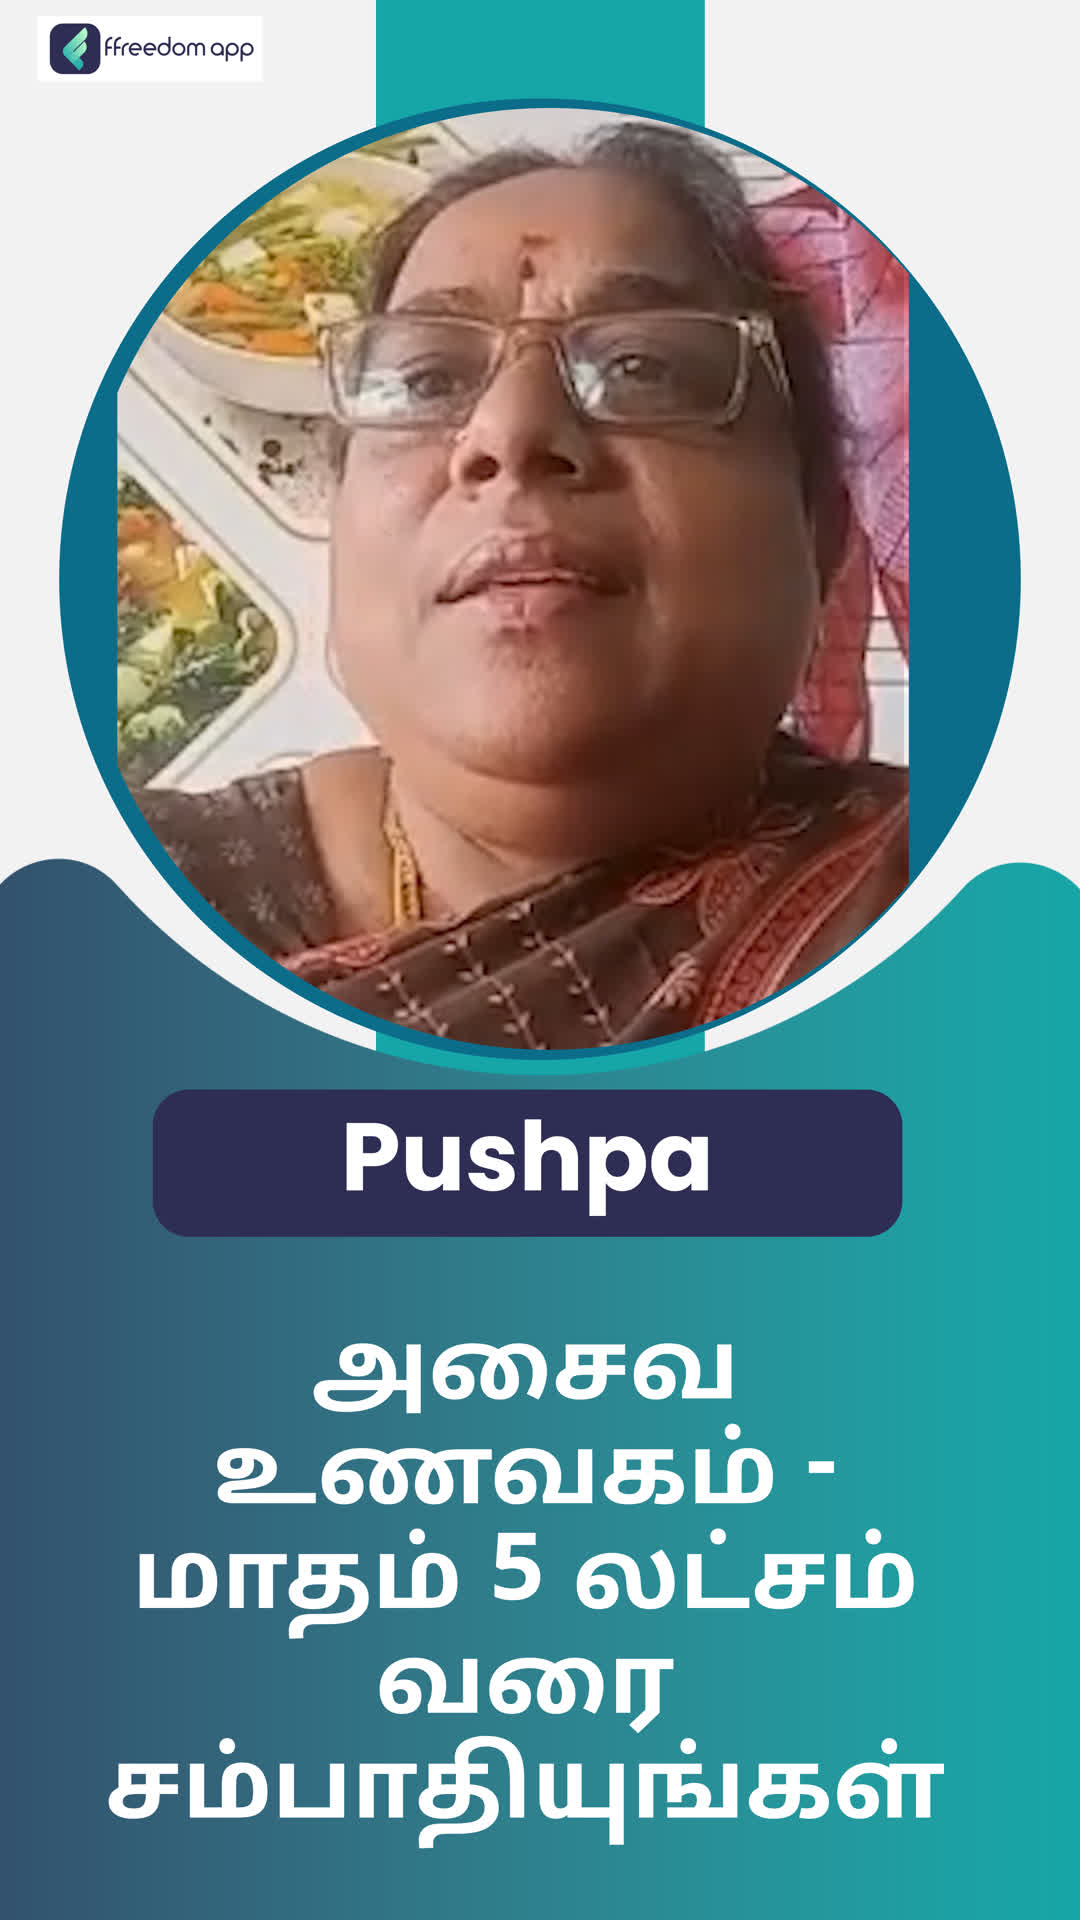 Pushpa .'s Honest Review of ffreedom app - Salem ,Tamil Nadu